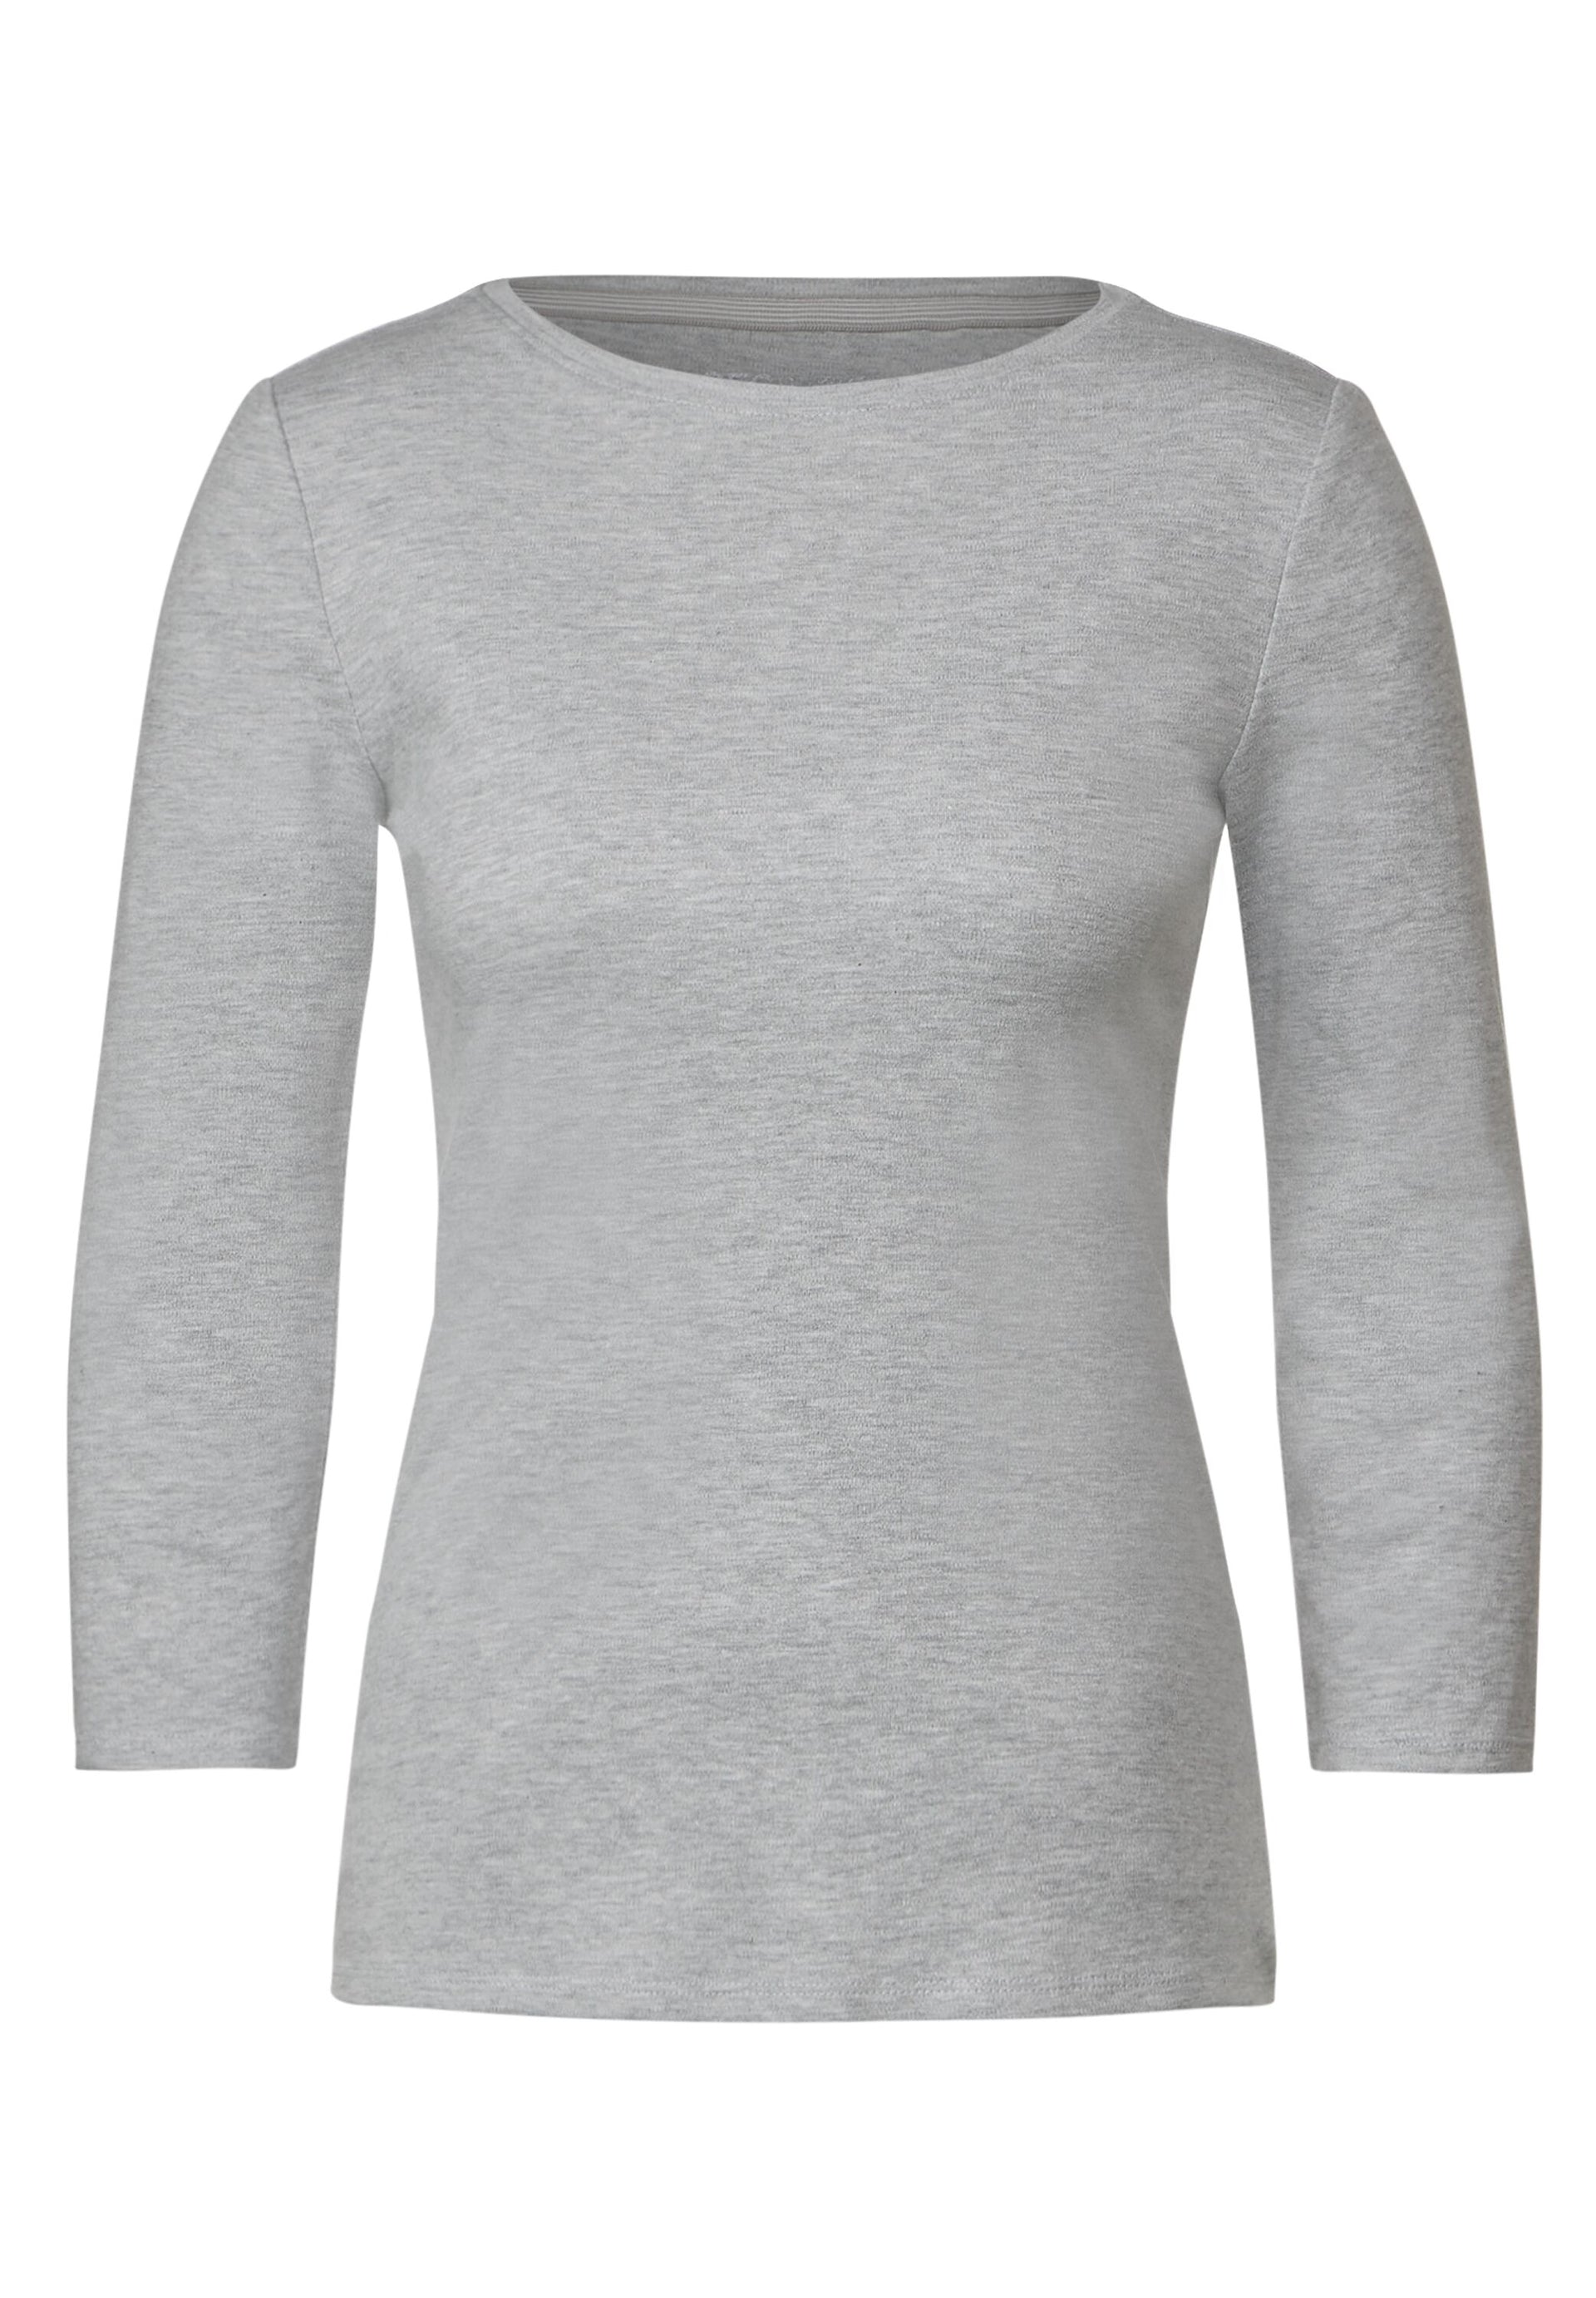 - in - – Farbe: Mode melange CECIL Unifarbe grey Basic TWISTY Shirt